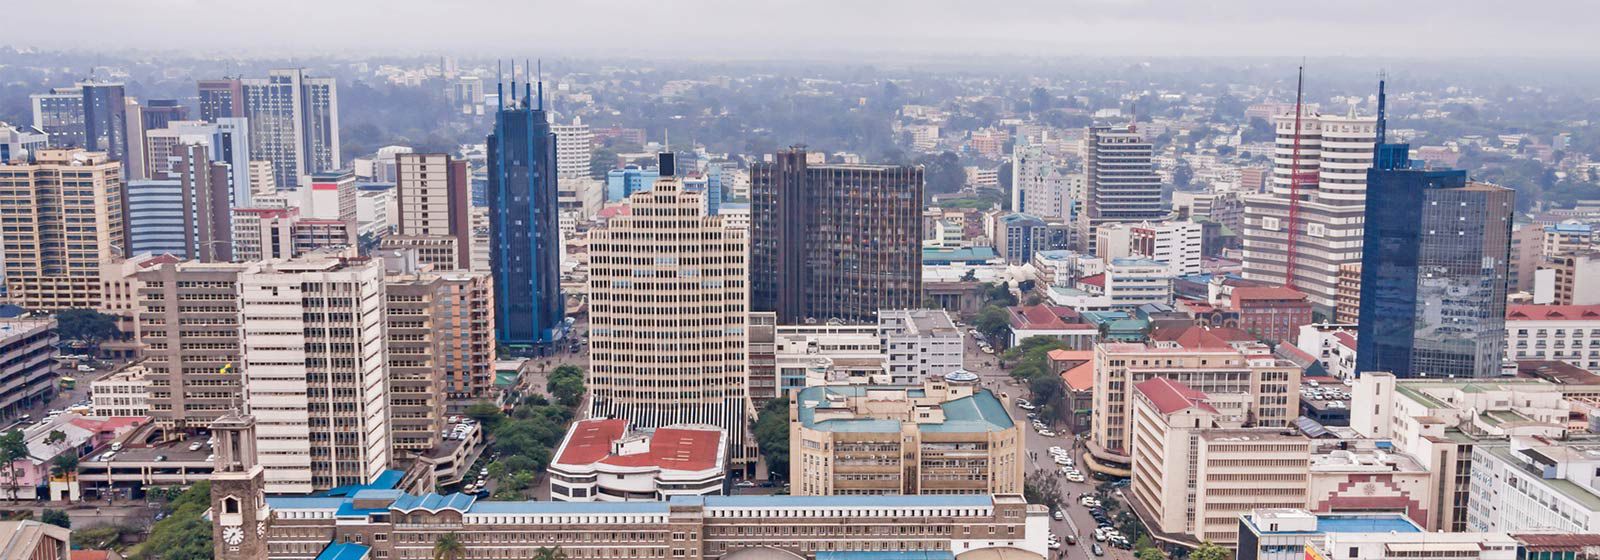 Aerial view of Nairobi